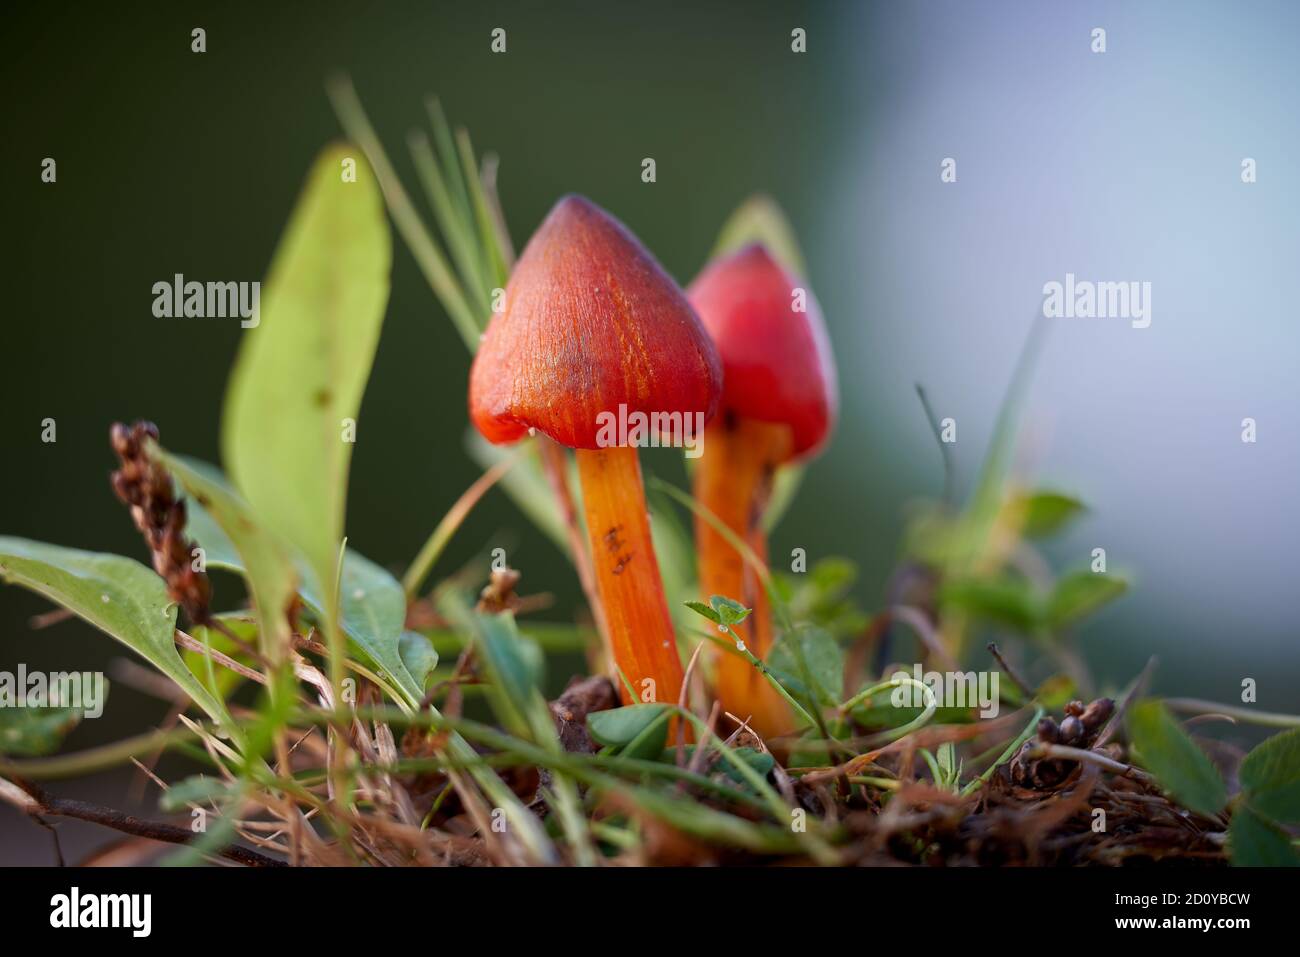 Sombrero hongo fotografías e imágenes de alta resolución - Alamy